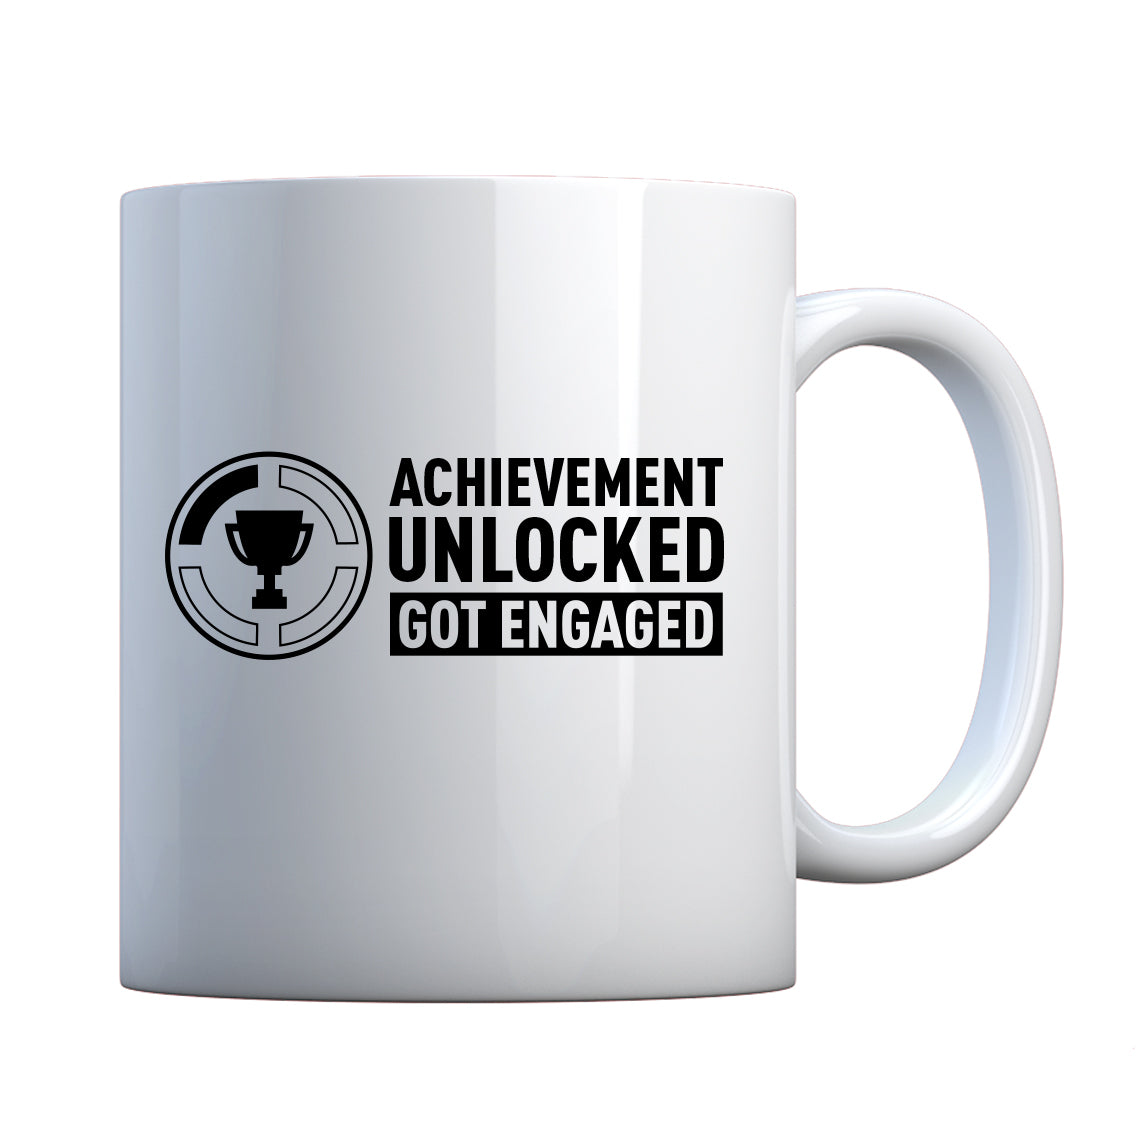 Achievement Unlocked Got Engaged Ceramic Gift Mug